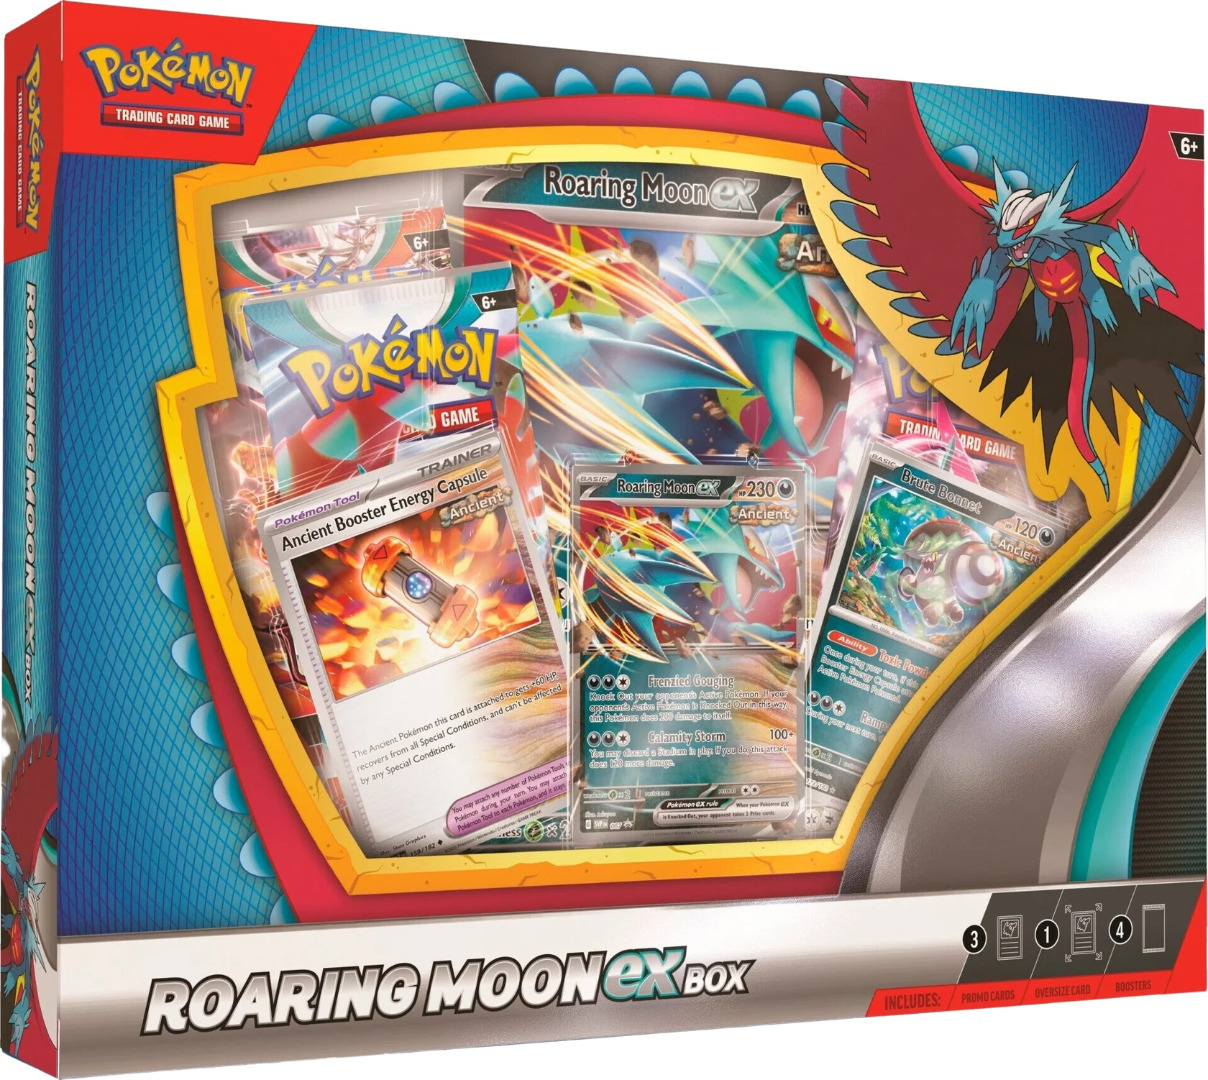 Pokémon - Roaring Moon November ex Box - English